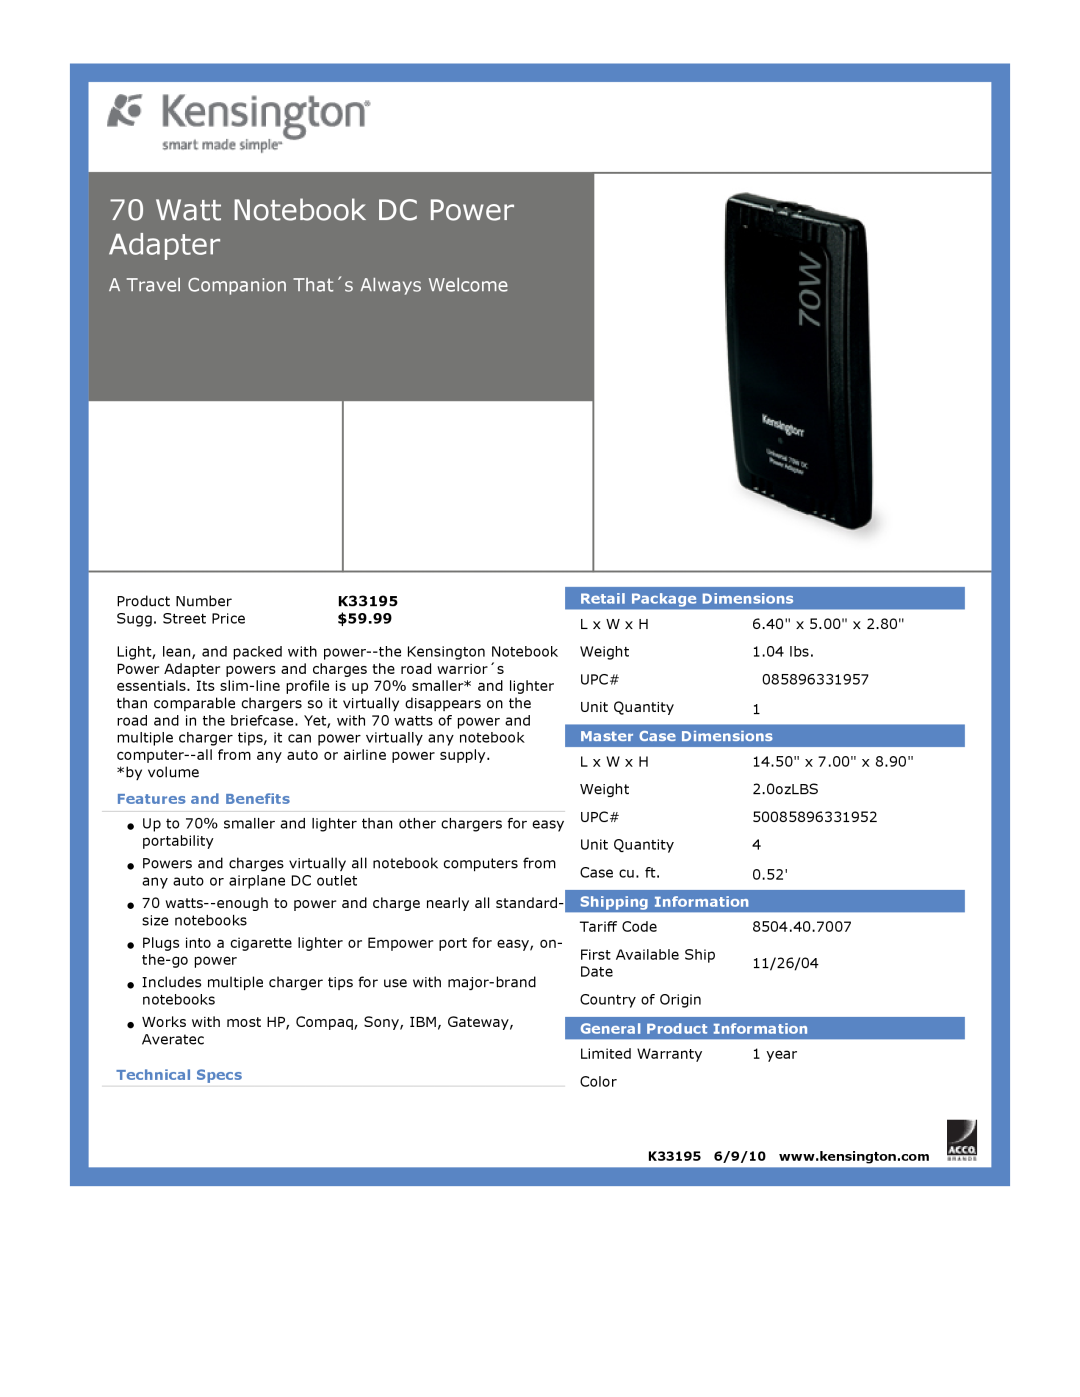 Kensington EU64325 Watt Notebook DC Power Adapter, A Travel Companion That´s Always Welcome, $59.99, Features and Benefits 